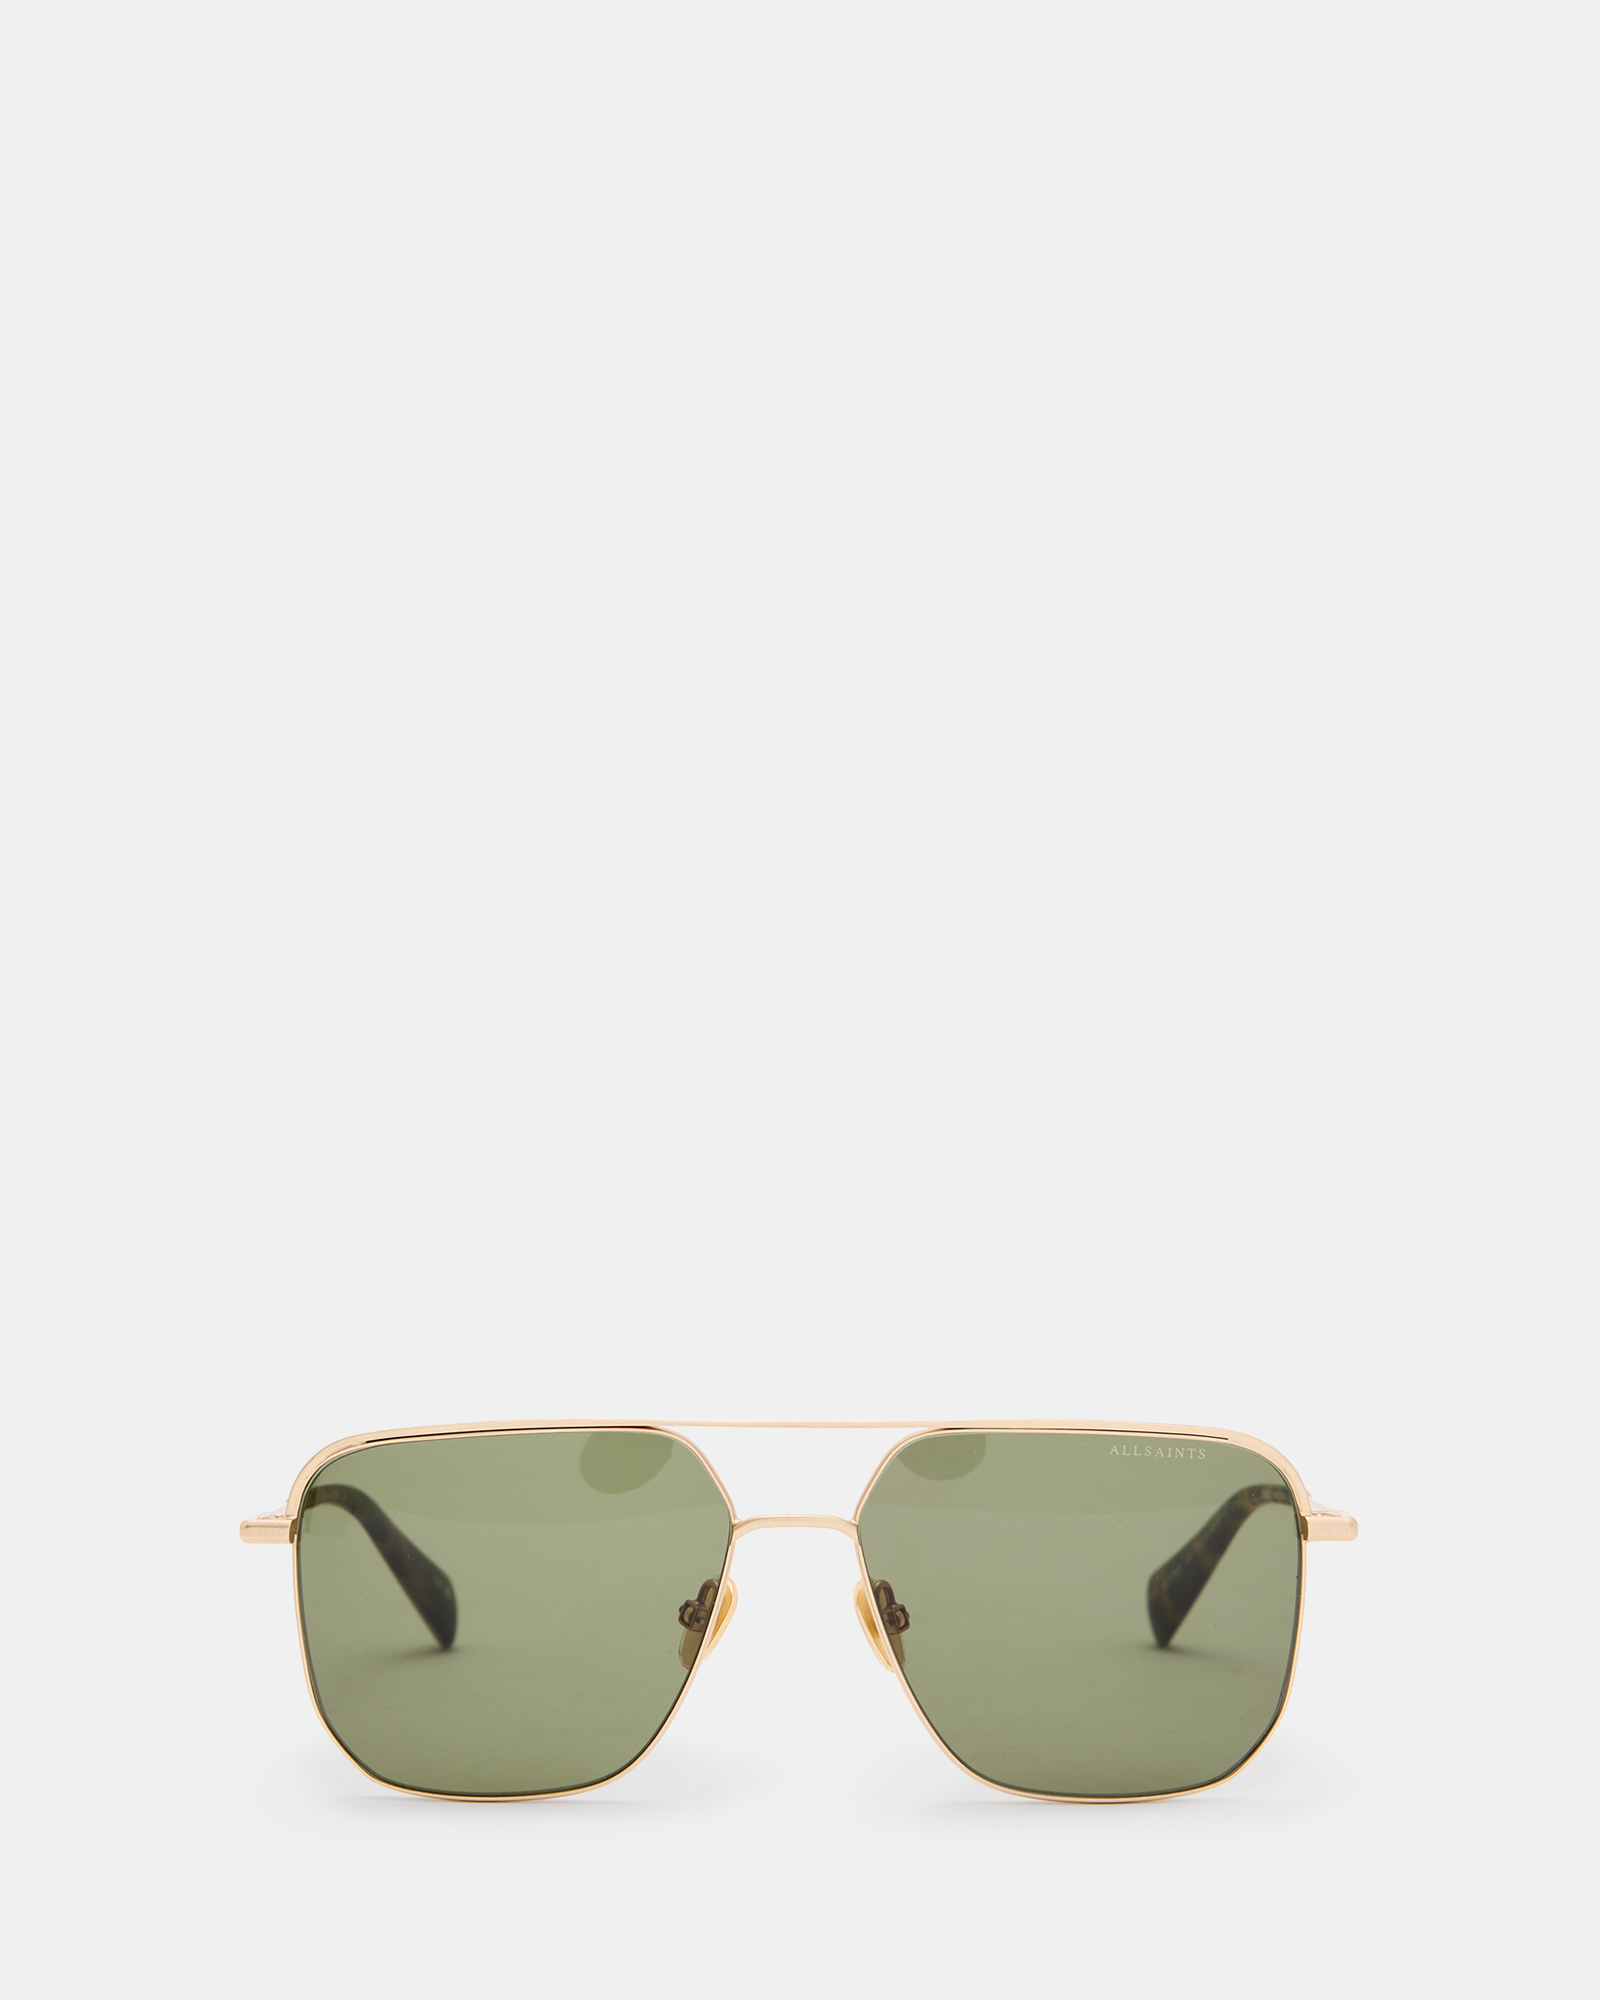 AllSaints Swift Square Aviator Sunglasses,, Gold, Size: One Size